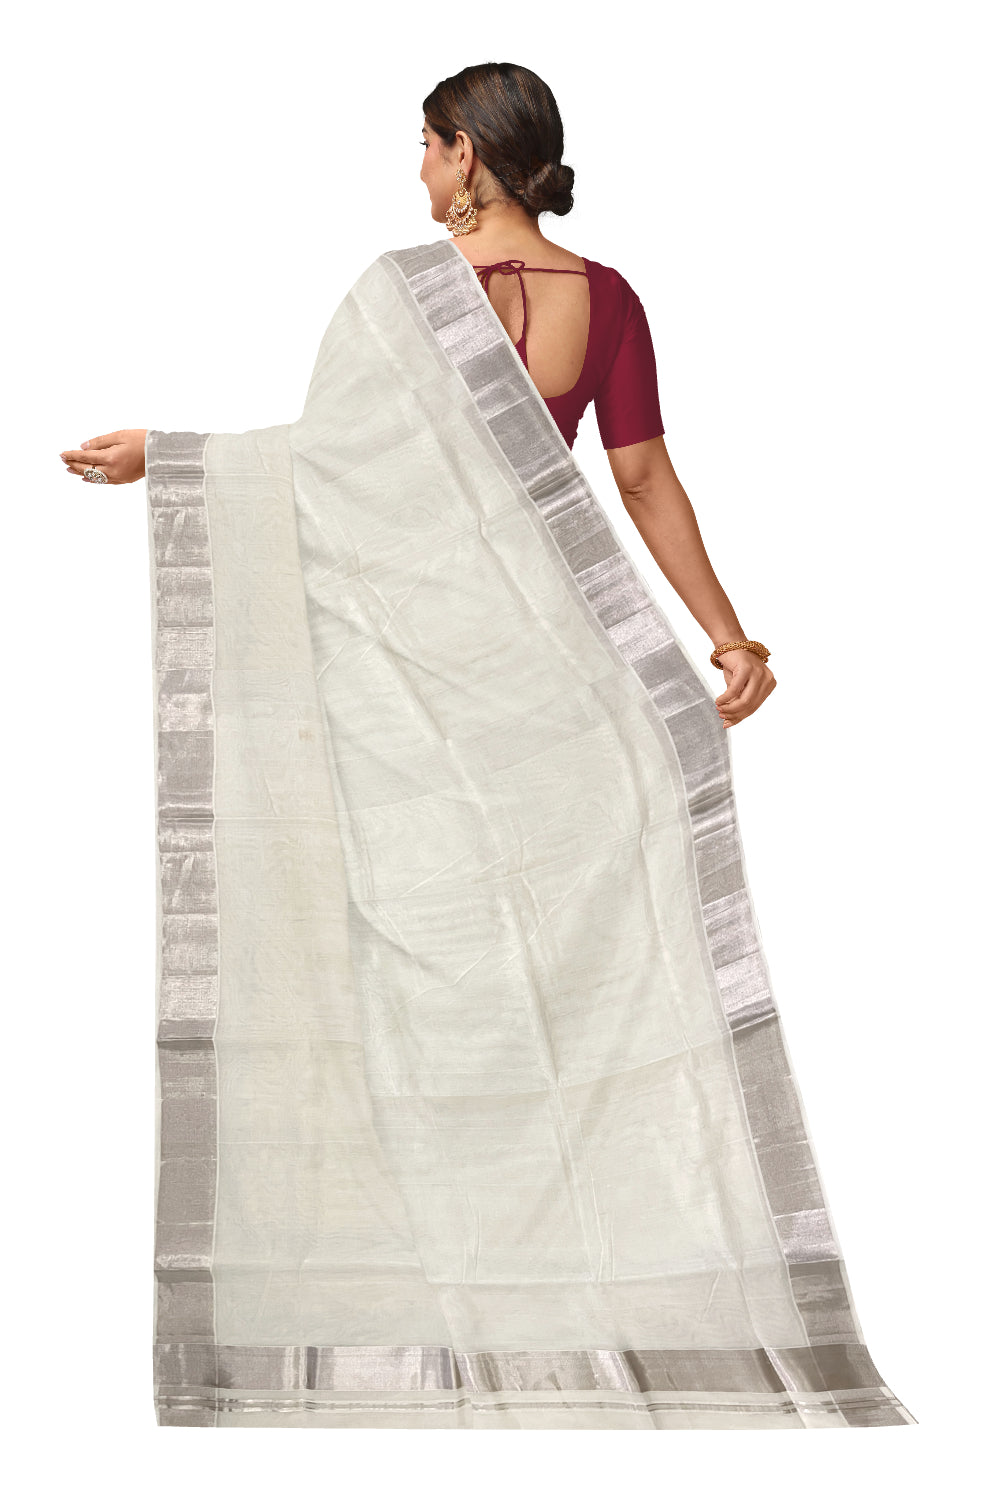 Southloom™ Handloom Pure Cotton Plain Saree with 3 inch Silver Kasavu Border